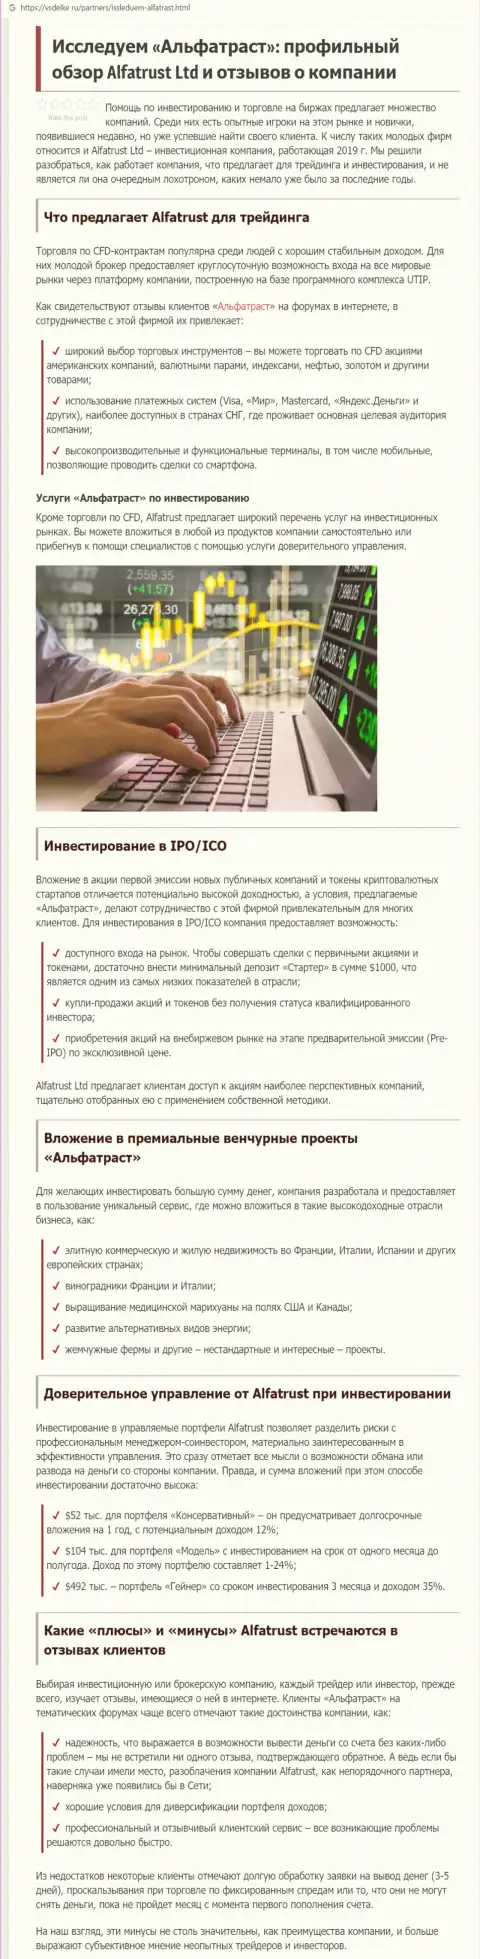 Публикация о Forex дилинговом центре AlfaTrust на сайте vsdelke ru